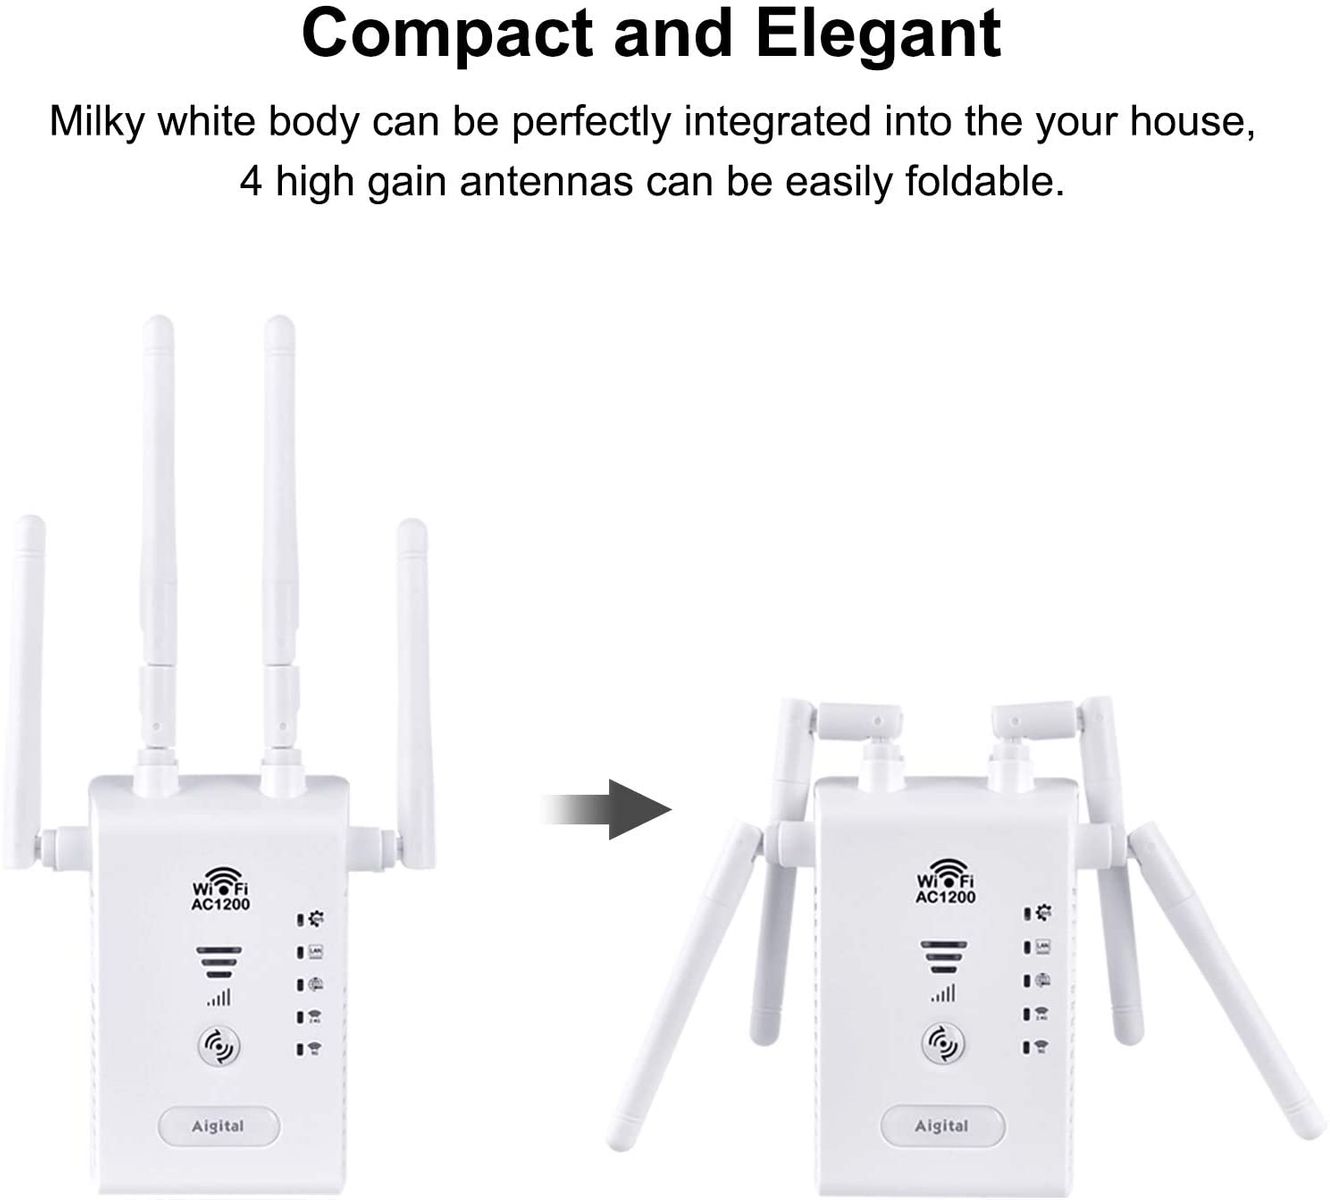 Aigital WLAN Repeater AC1200 4 External Antennas LAN Port Speed up to 1200 Mbps